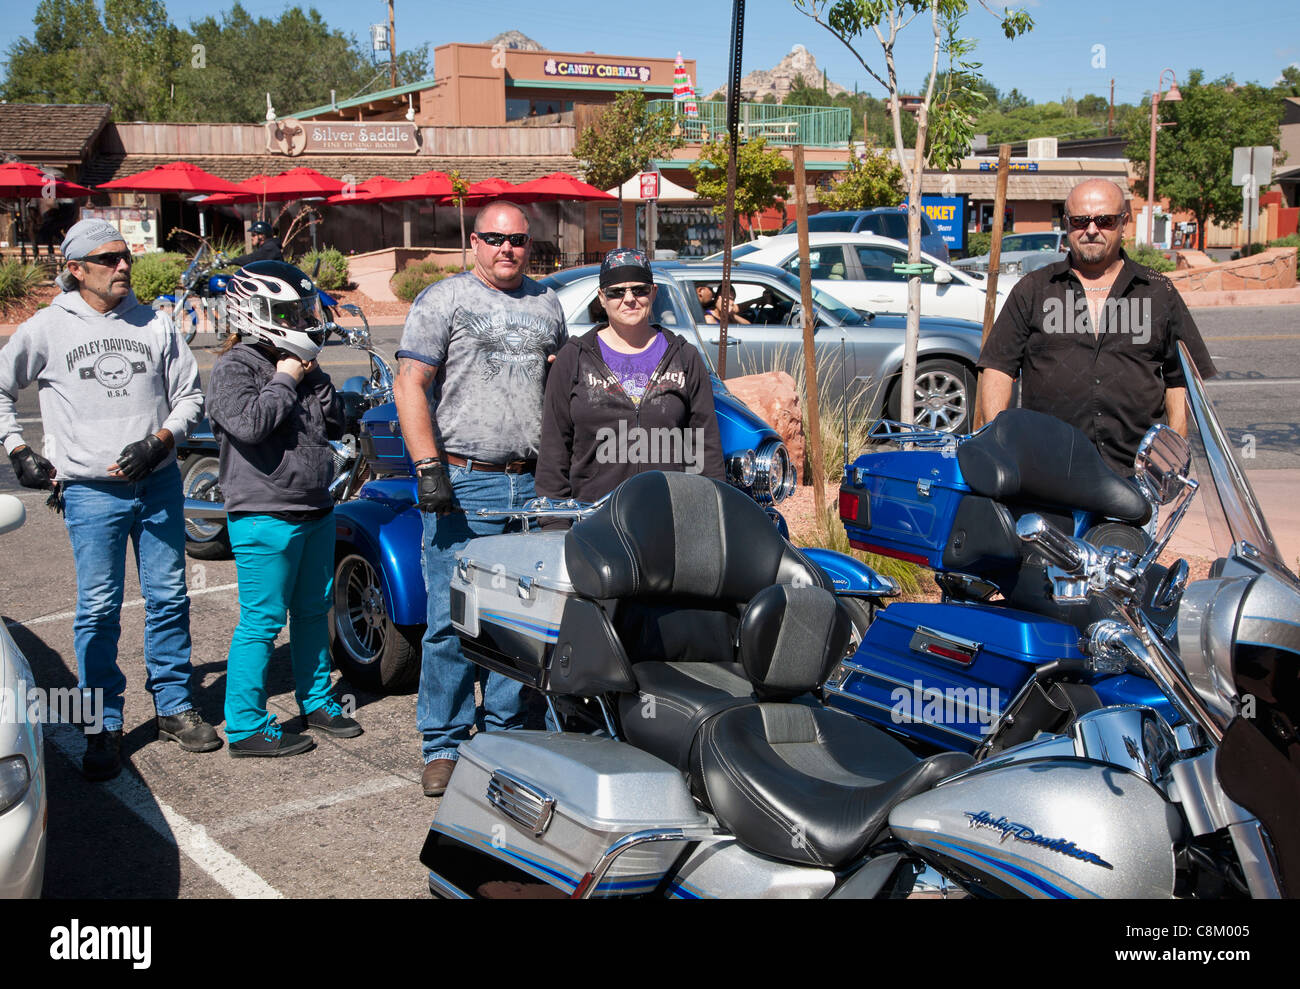 Harley Davidson enthusiasts Stock Photo